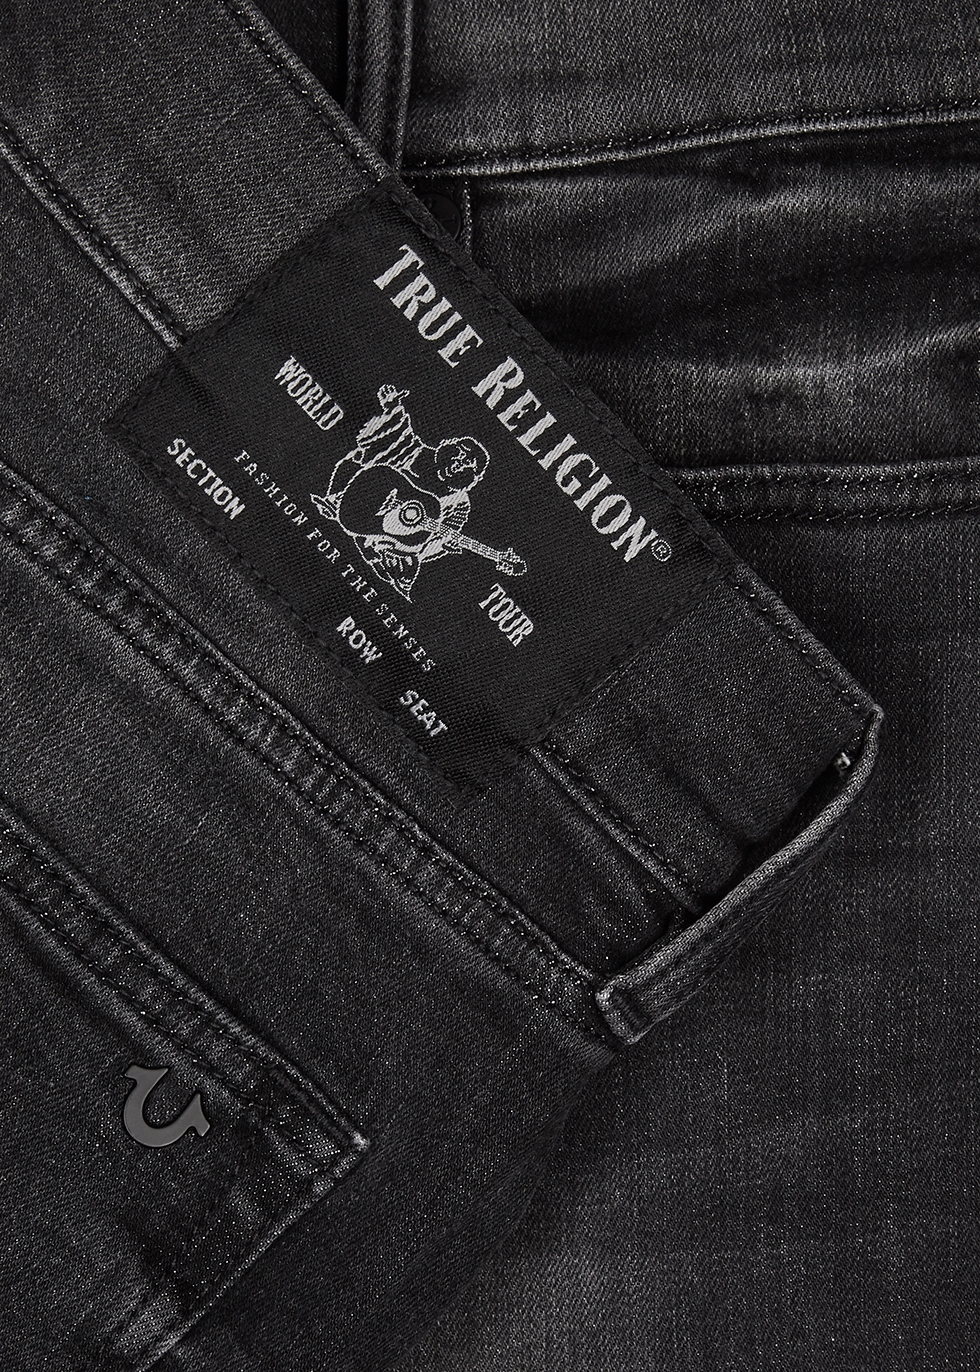 True Religion  Jeans  SlimFit Rocco Flap With Rips Denim Jeans in Denim  107366